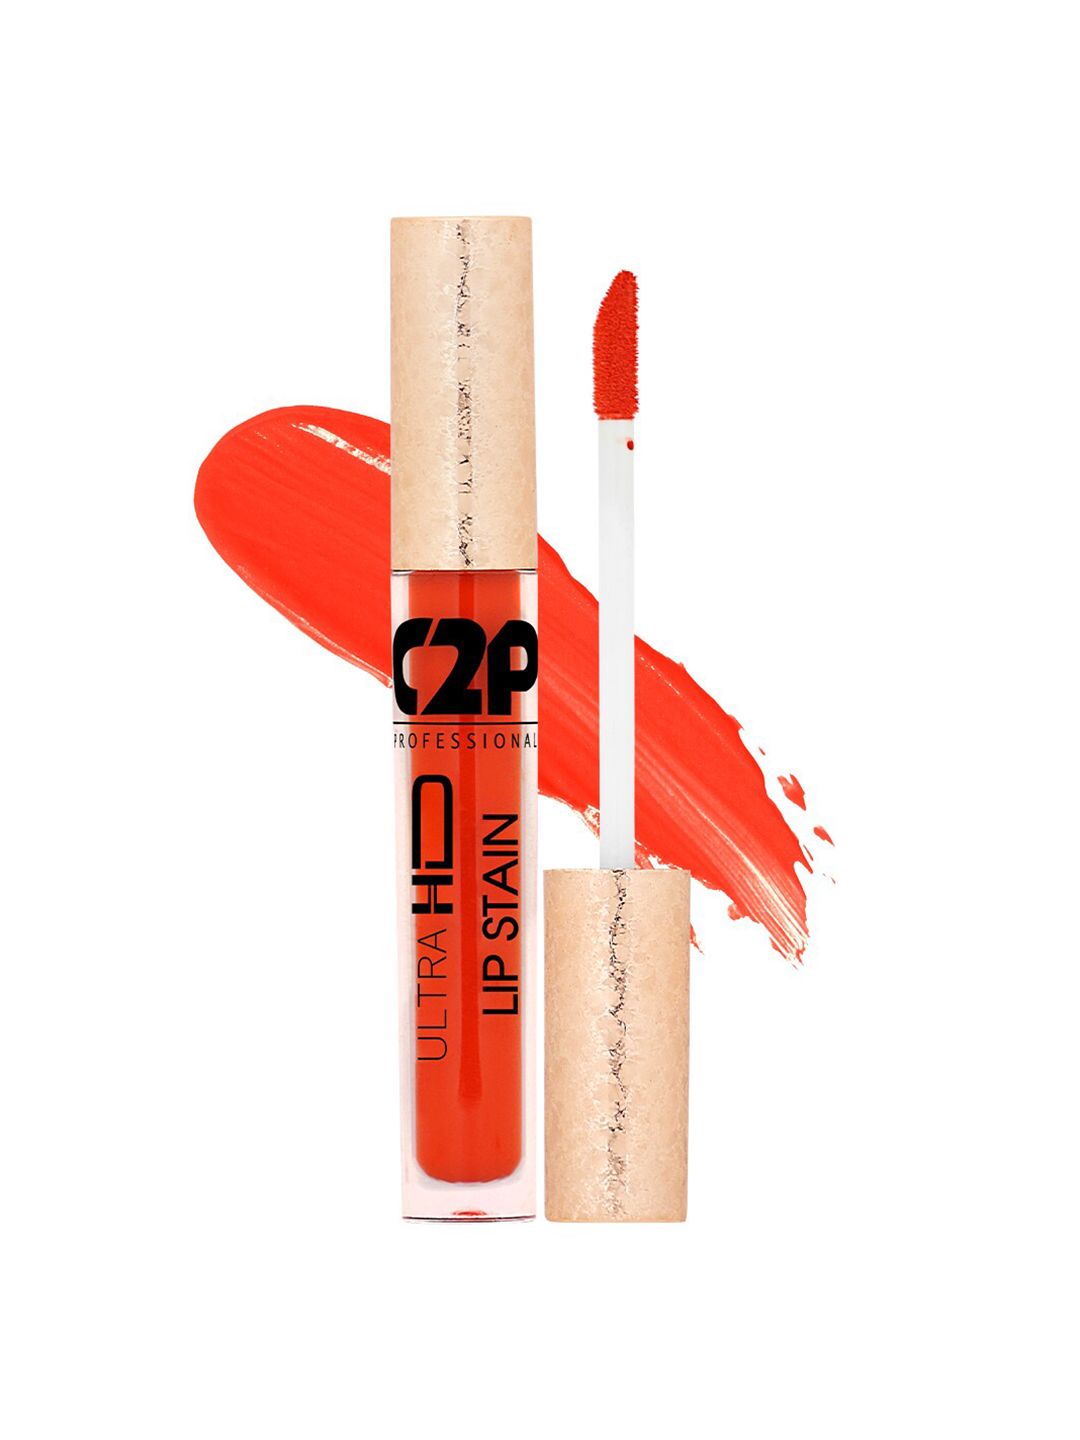 C2P PROFESSIONAL MAKEUP Lip Stain Liquid Lipstick - Cherry Poppins 03 Price in India